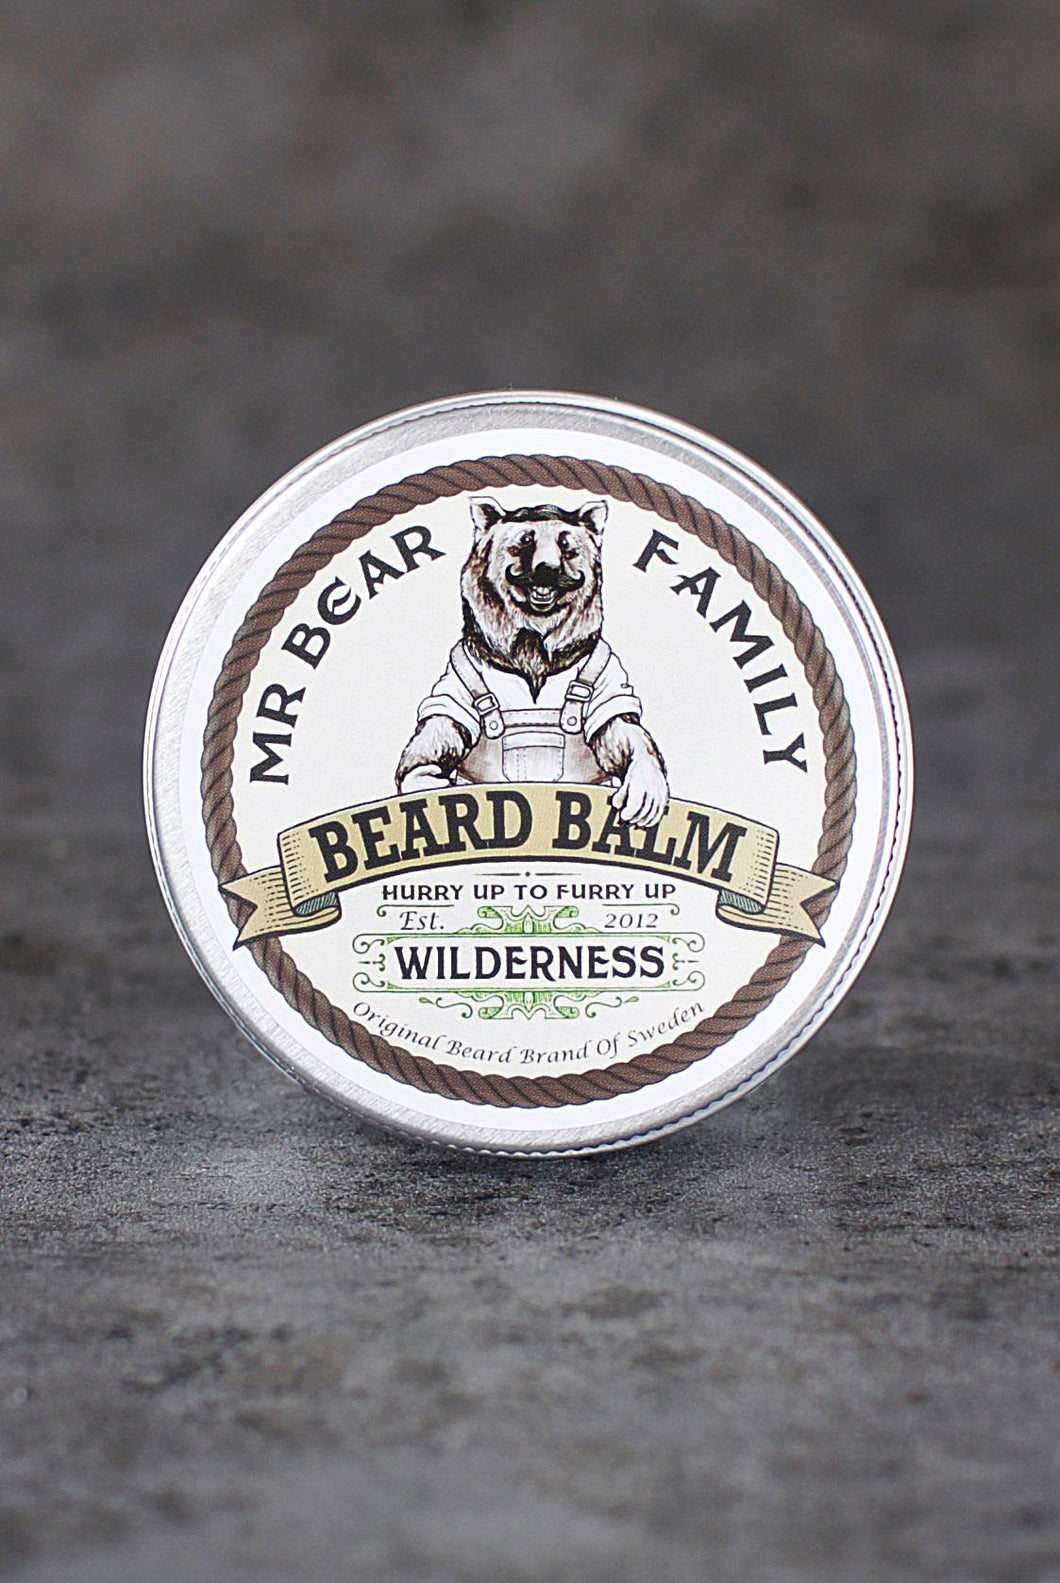 Mr Bear Family - Beard Balm Wilderness